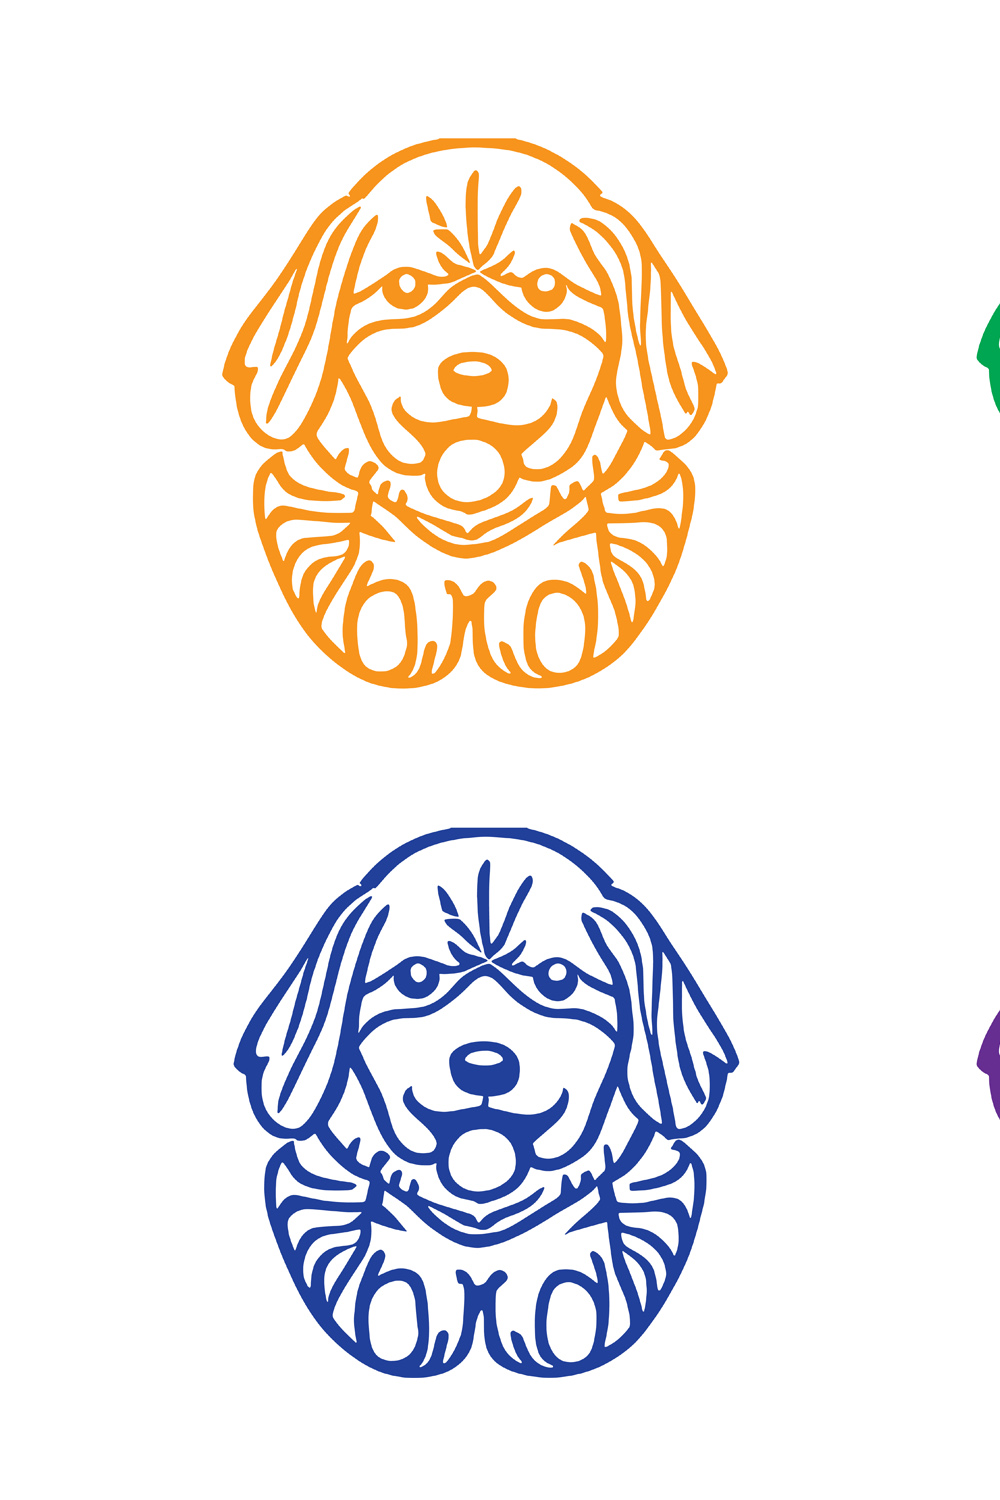 A Cute Dog logo Illustration pinterest preview image.